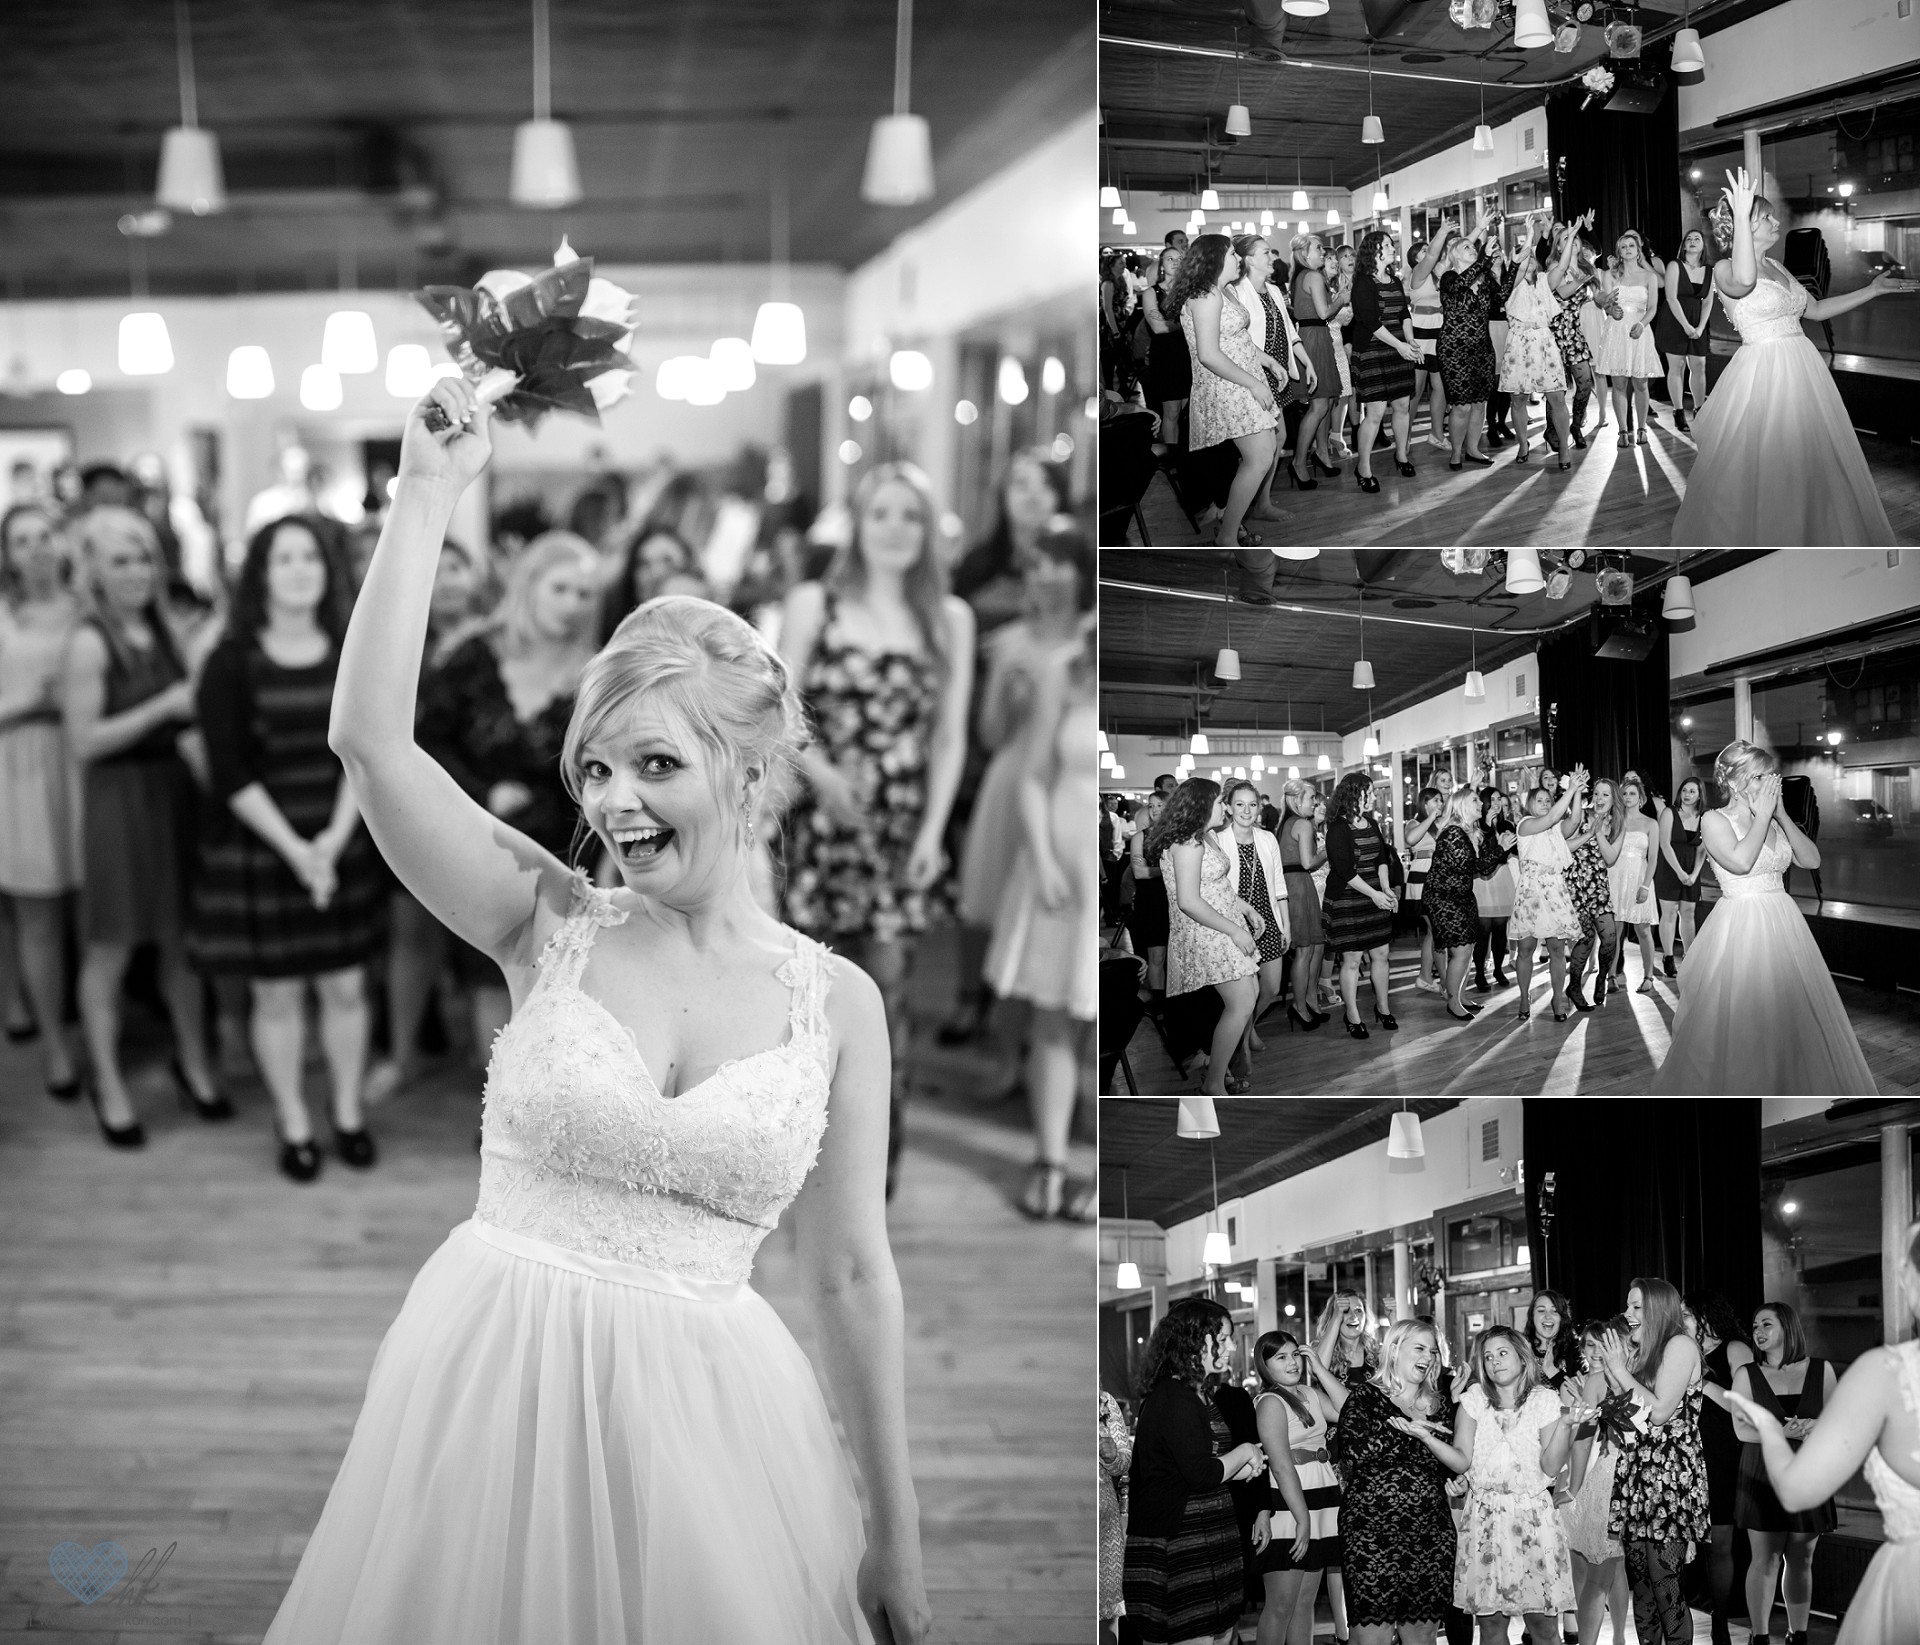 Old Town Marquee Lansing, MI, Wedding Reception dance floor photographs